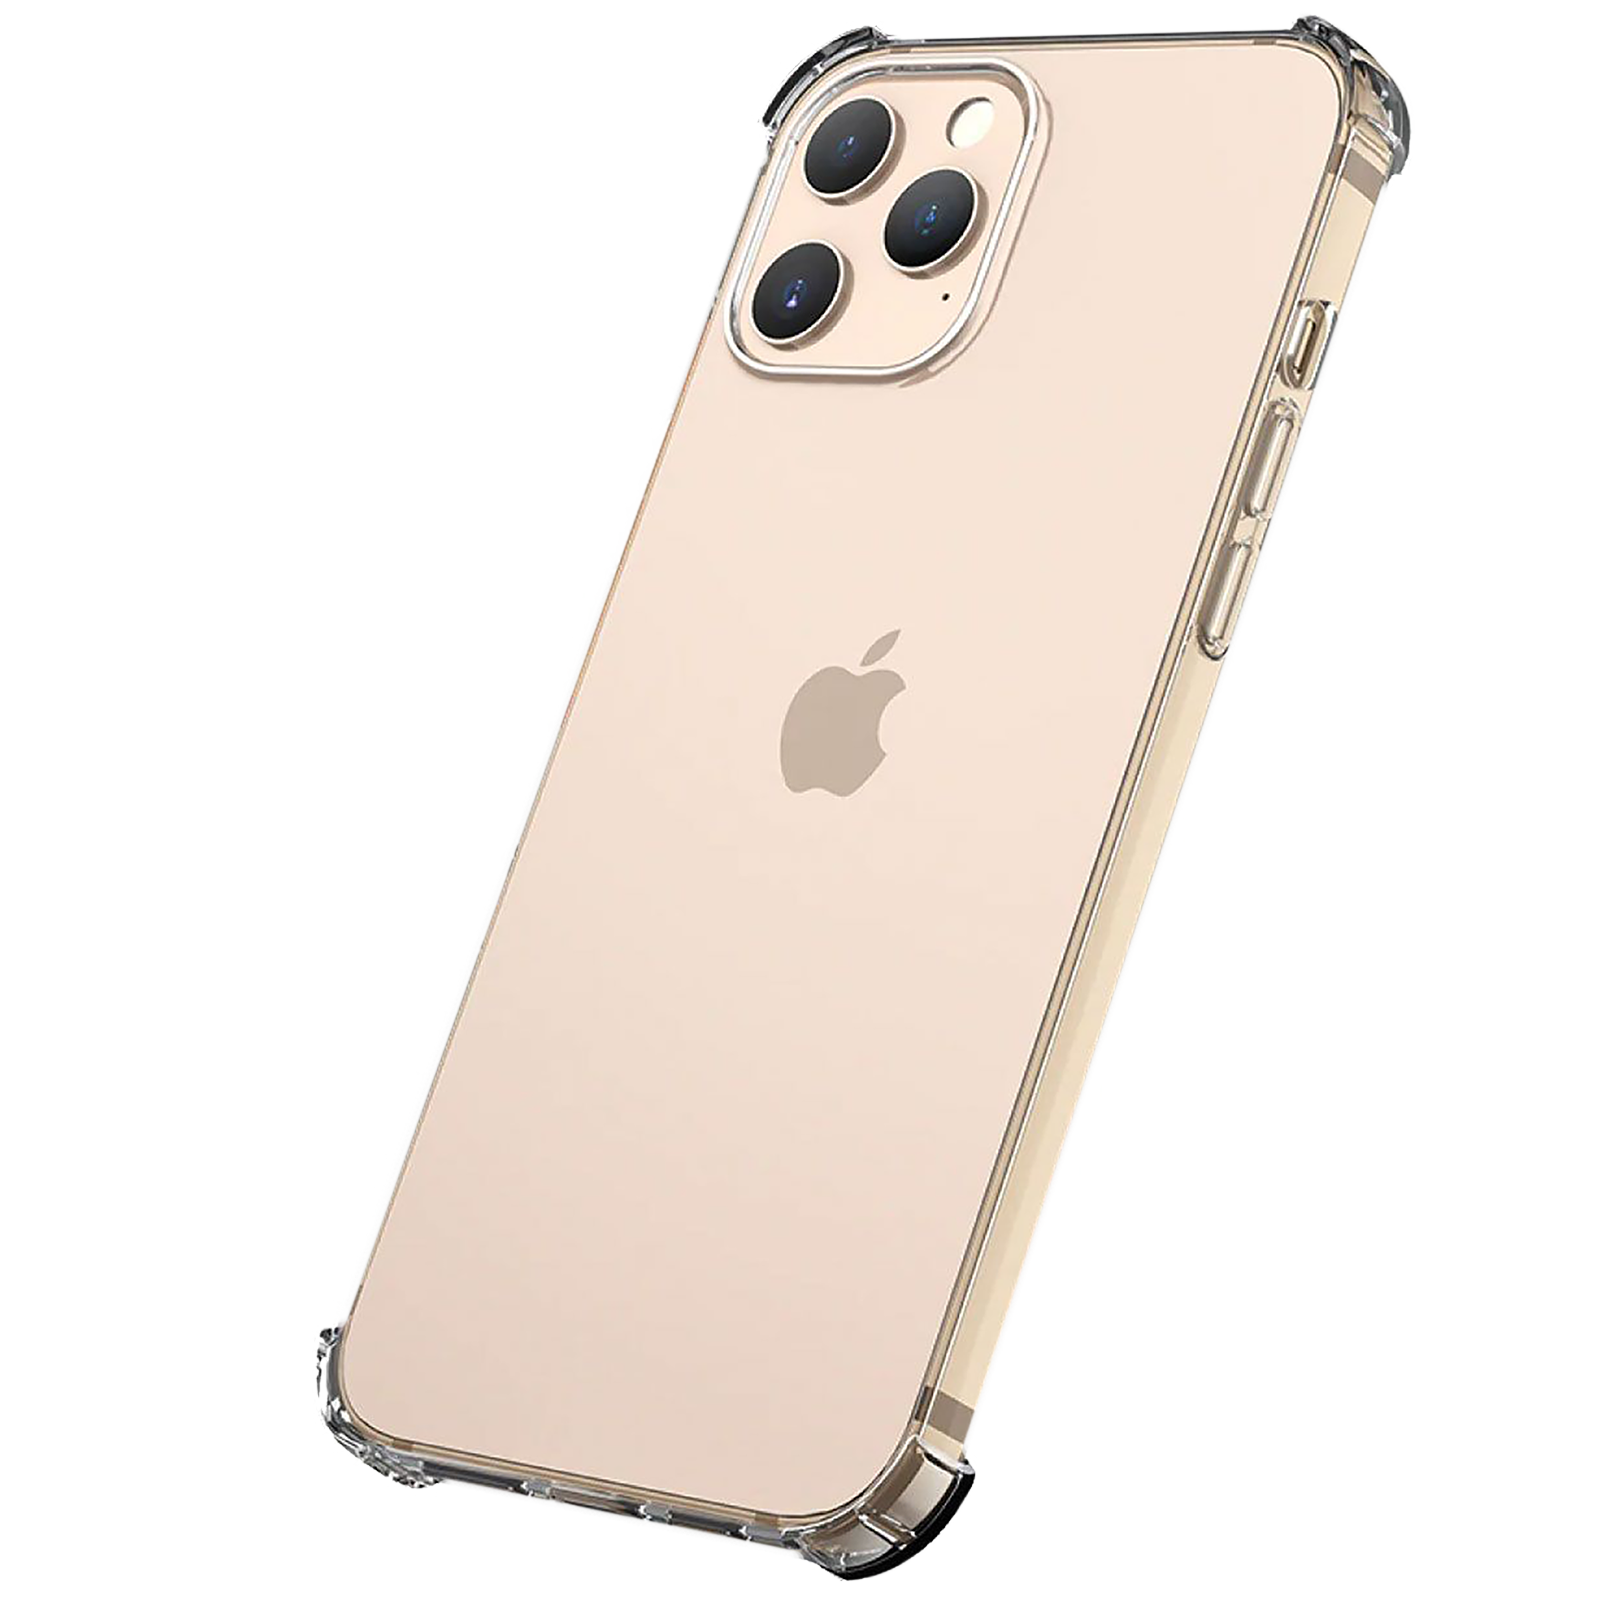 Protector iPhone 12/12 Pro transparente con brillos color dorado - en  Cellular Center